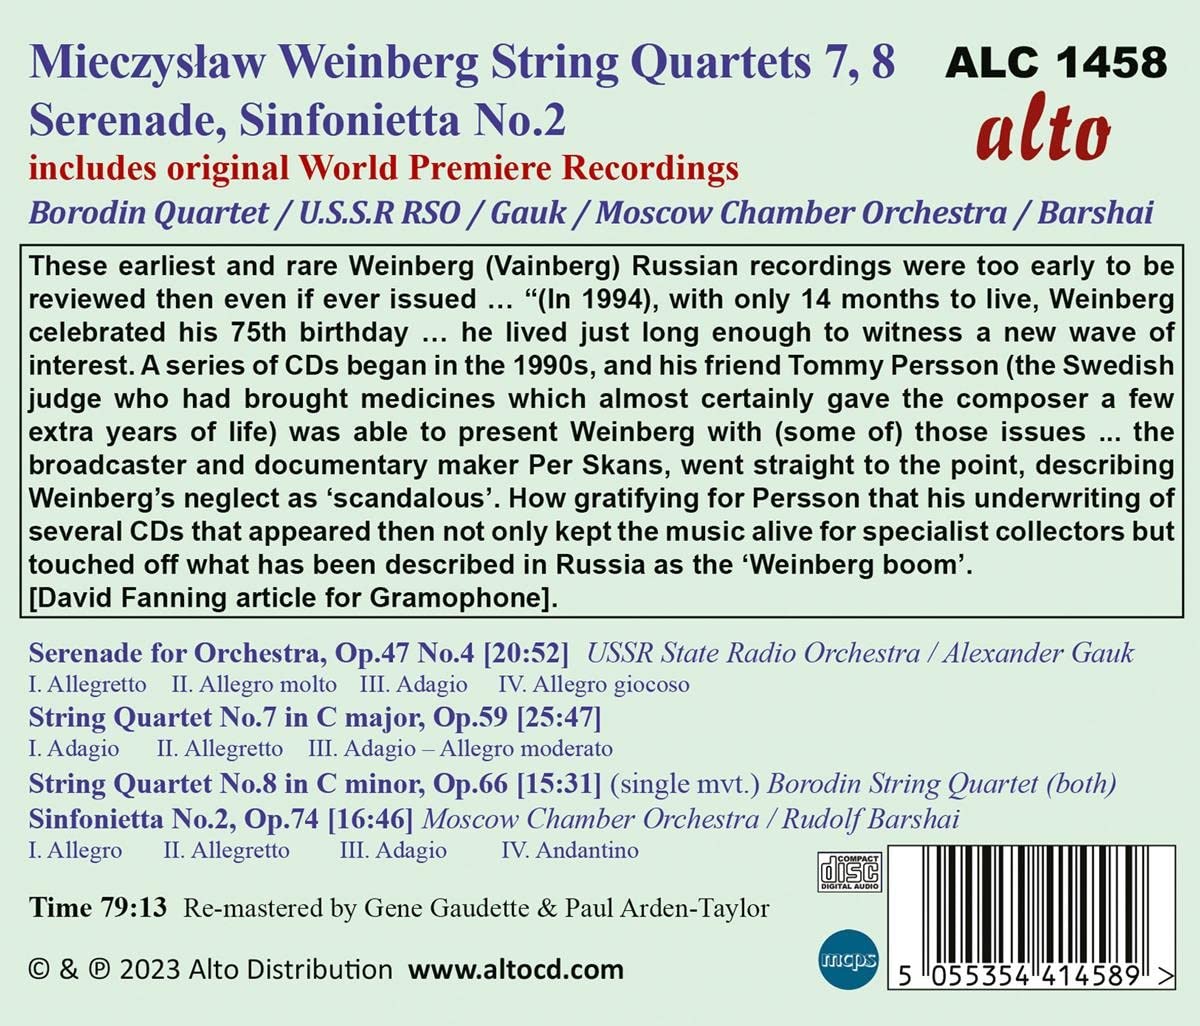 Weinberg: String Quartets Nos. 7 & 8, Serenade Op.47/4; Sinfonietta No. 2 - Borodin Quartet, USSR State Radio Orchestra, Gauk Moscow Chamber Orchestra, Barshai (CD + FREE MP3)